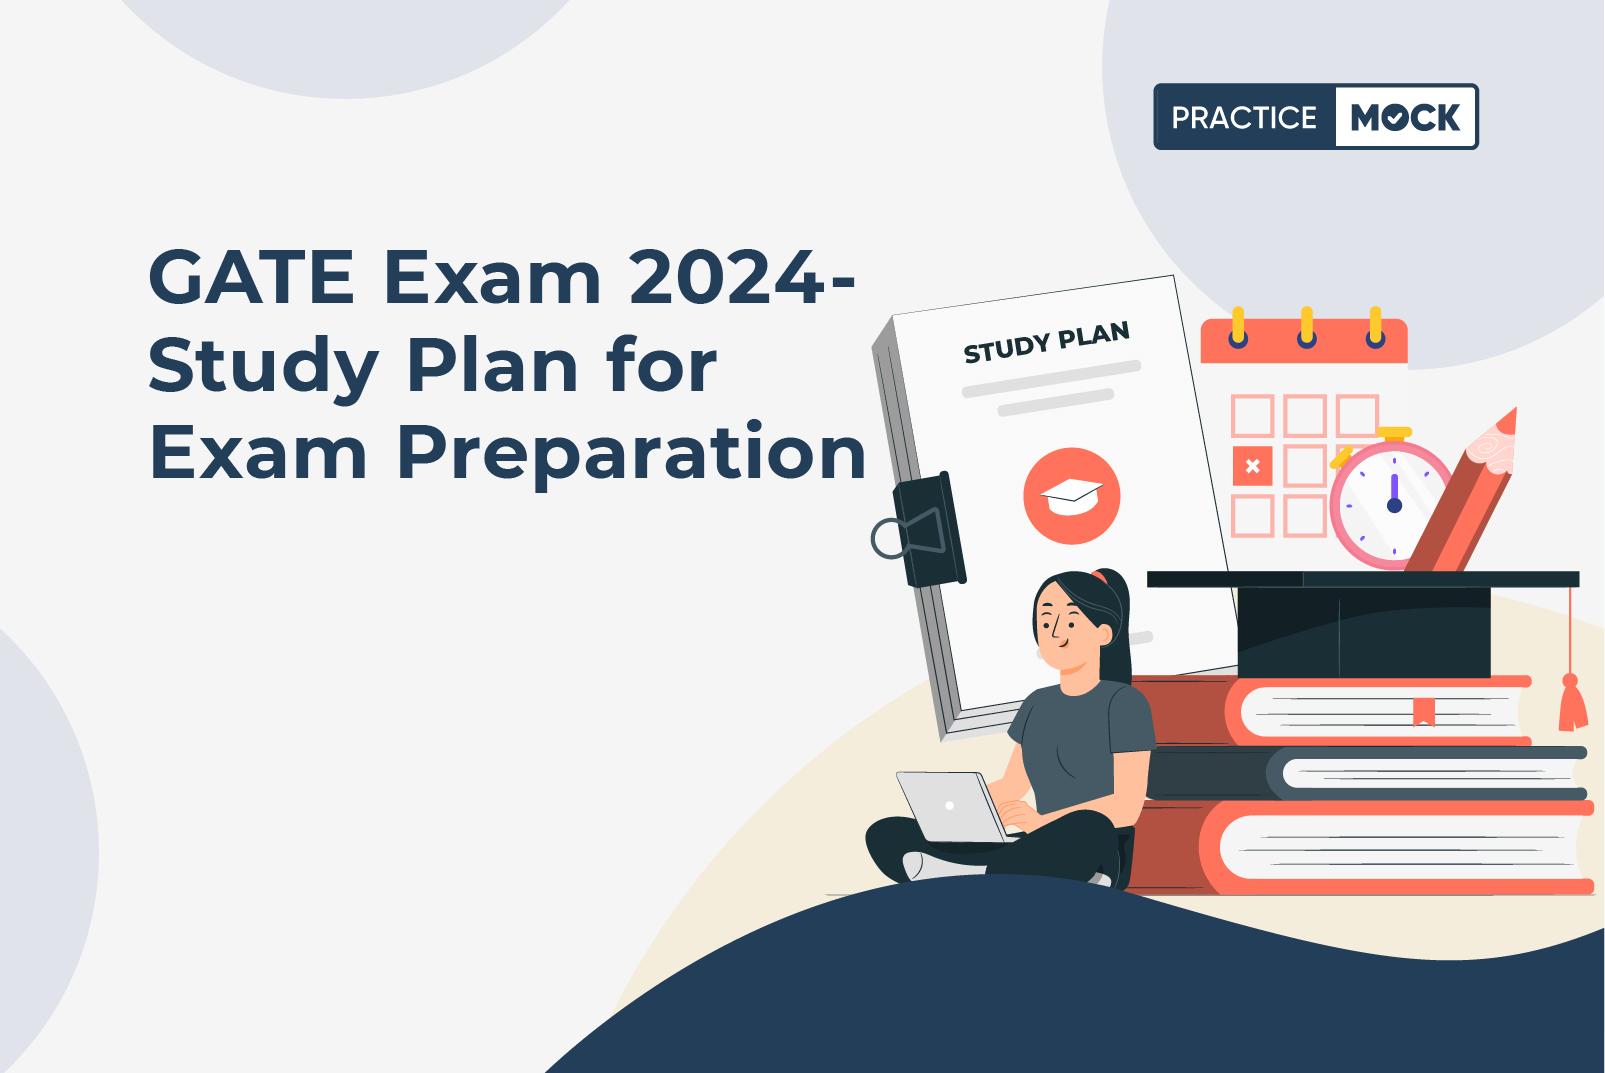 GATE Exam 2024 - Study Plan for Exam Preparation